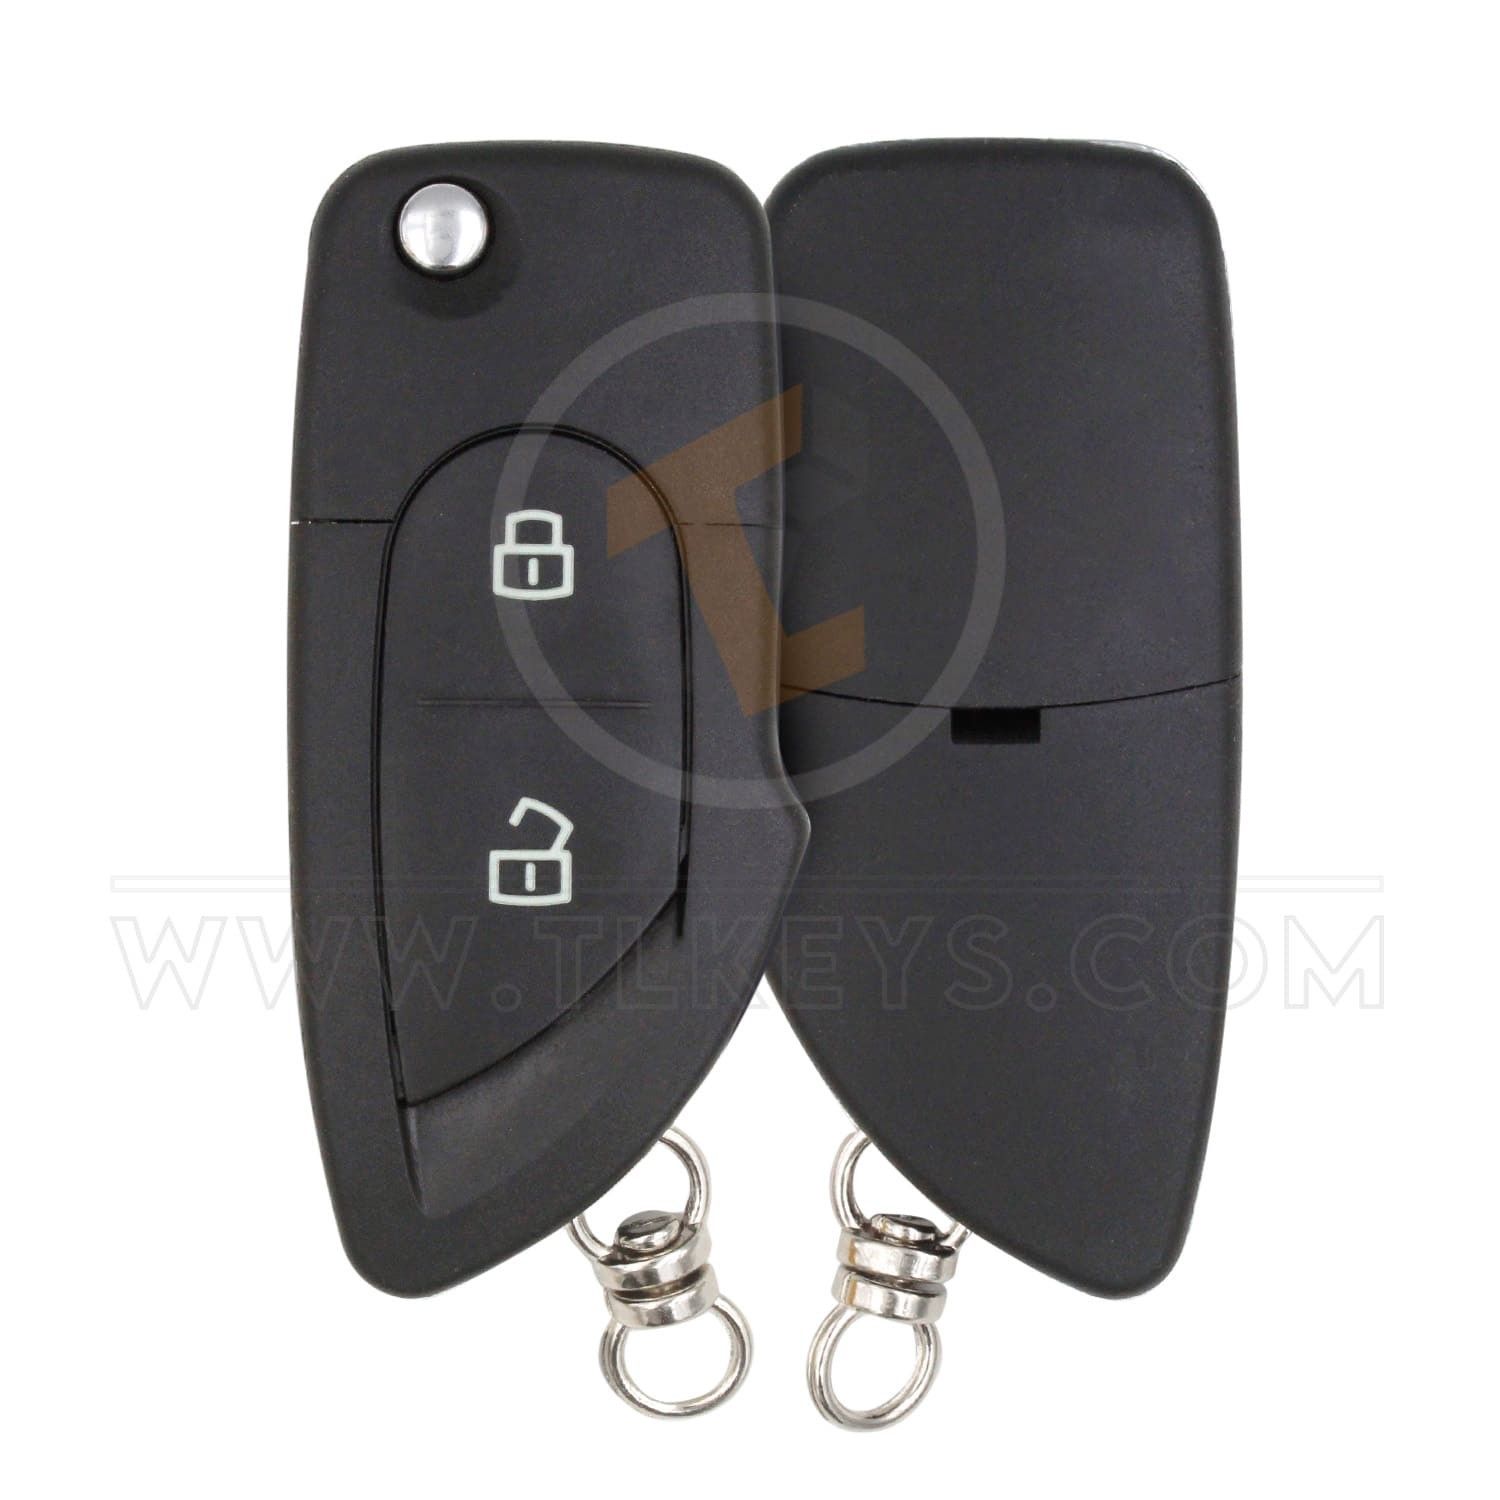 Lamborghini Flip Key Remote AftermarketGallardo Buttons 2